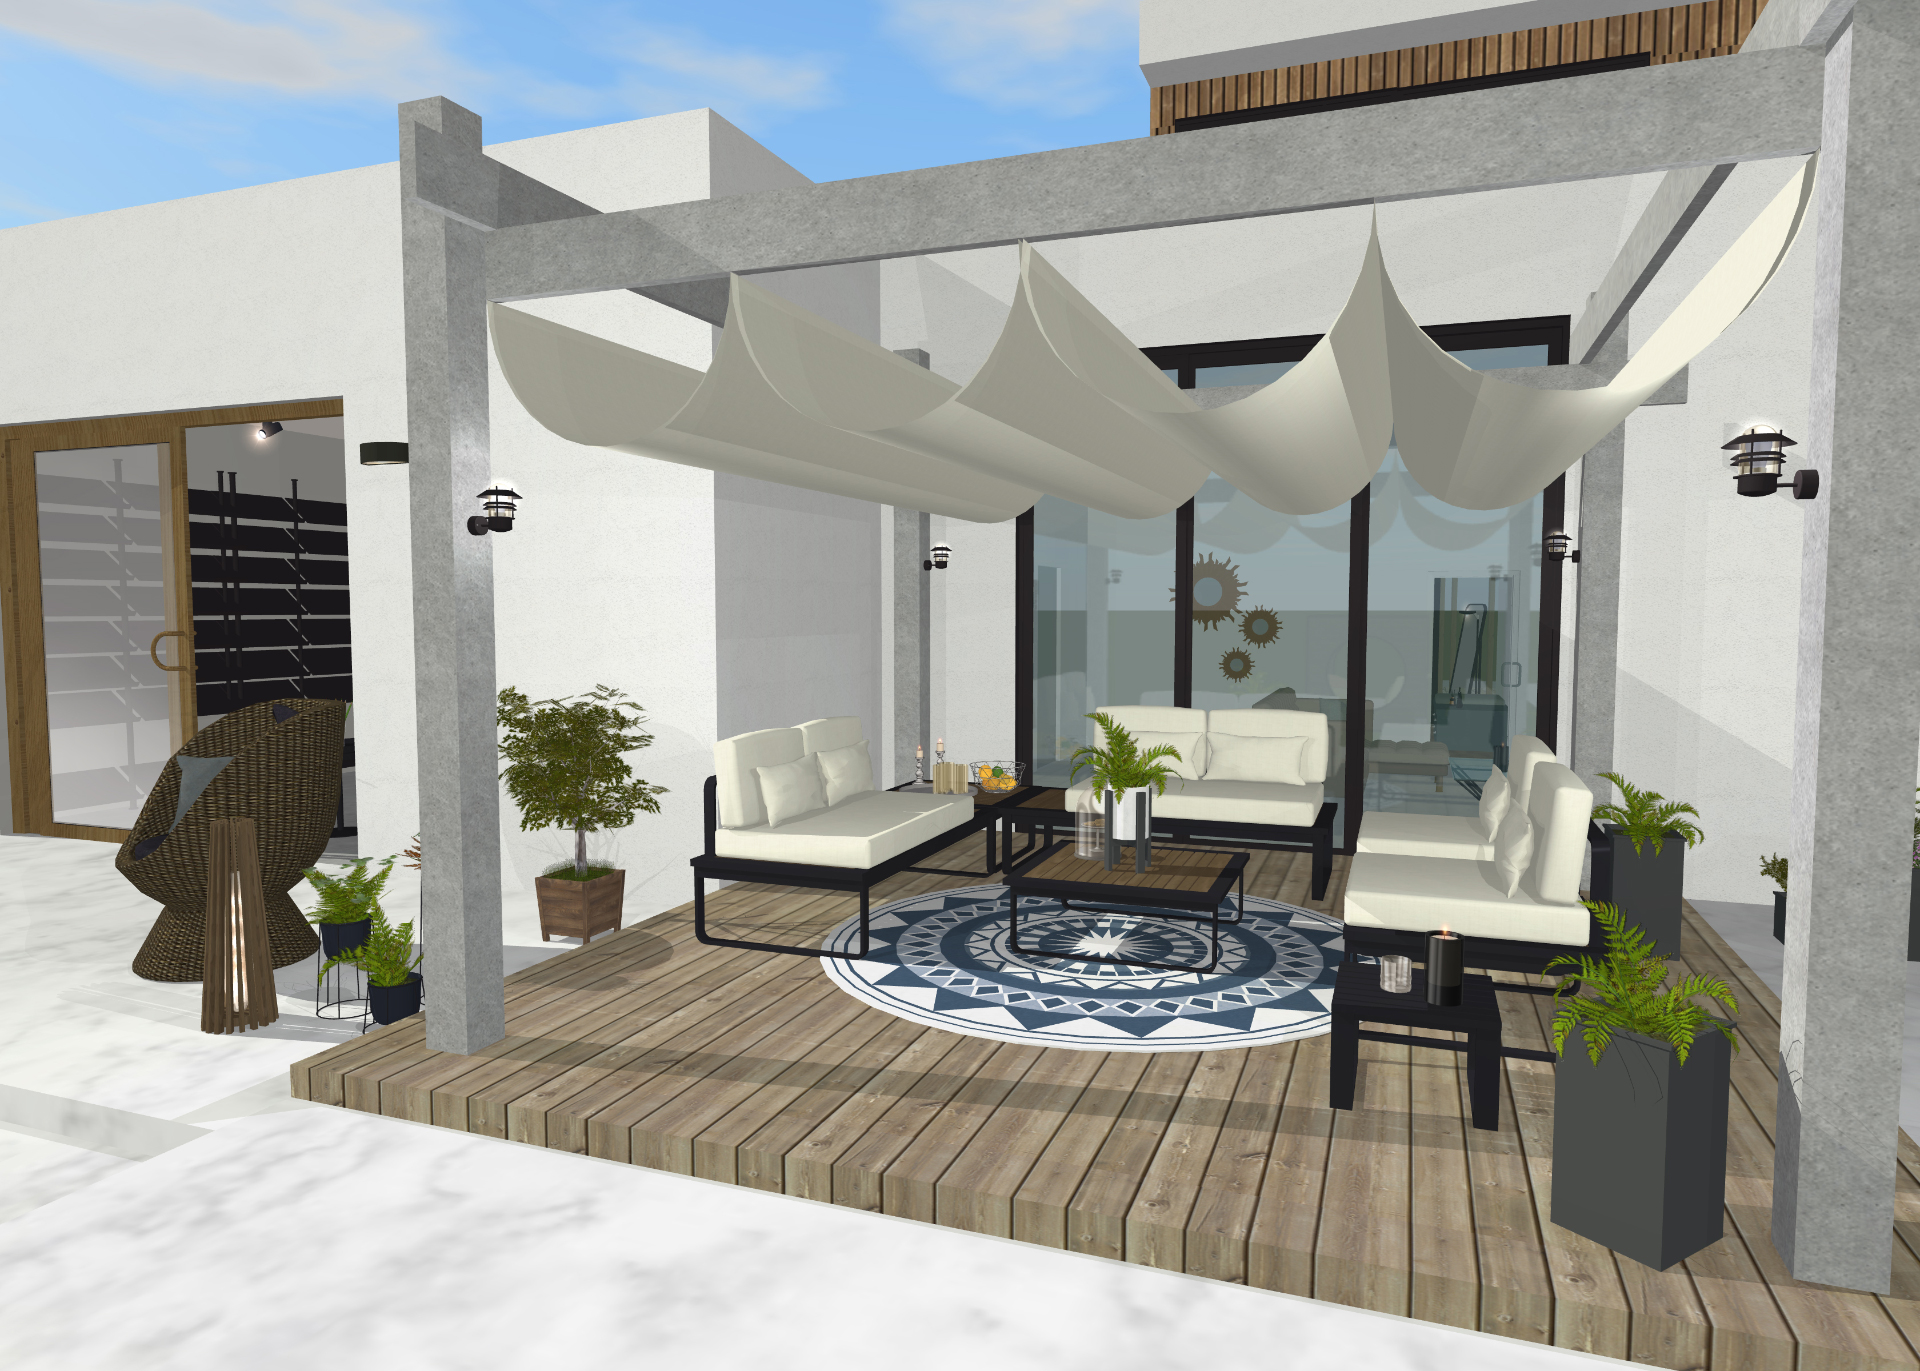 .Home Design 3D Microsoft - Six N Five Surreal Interior Architecture